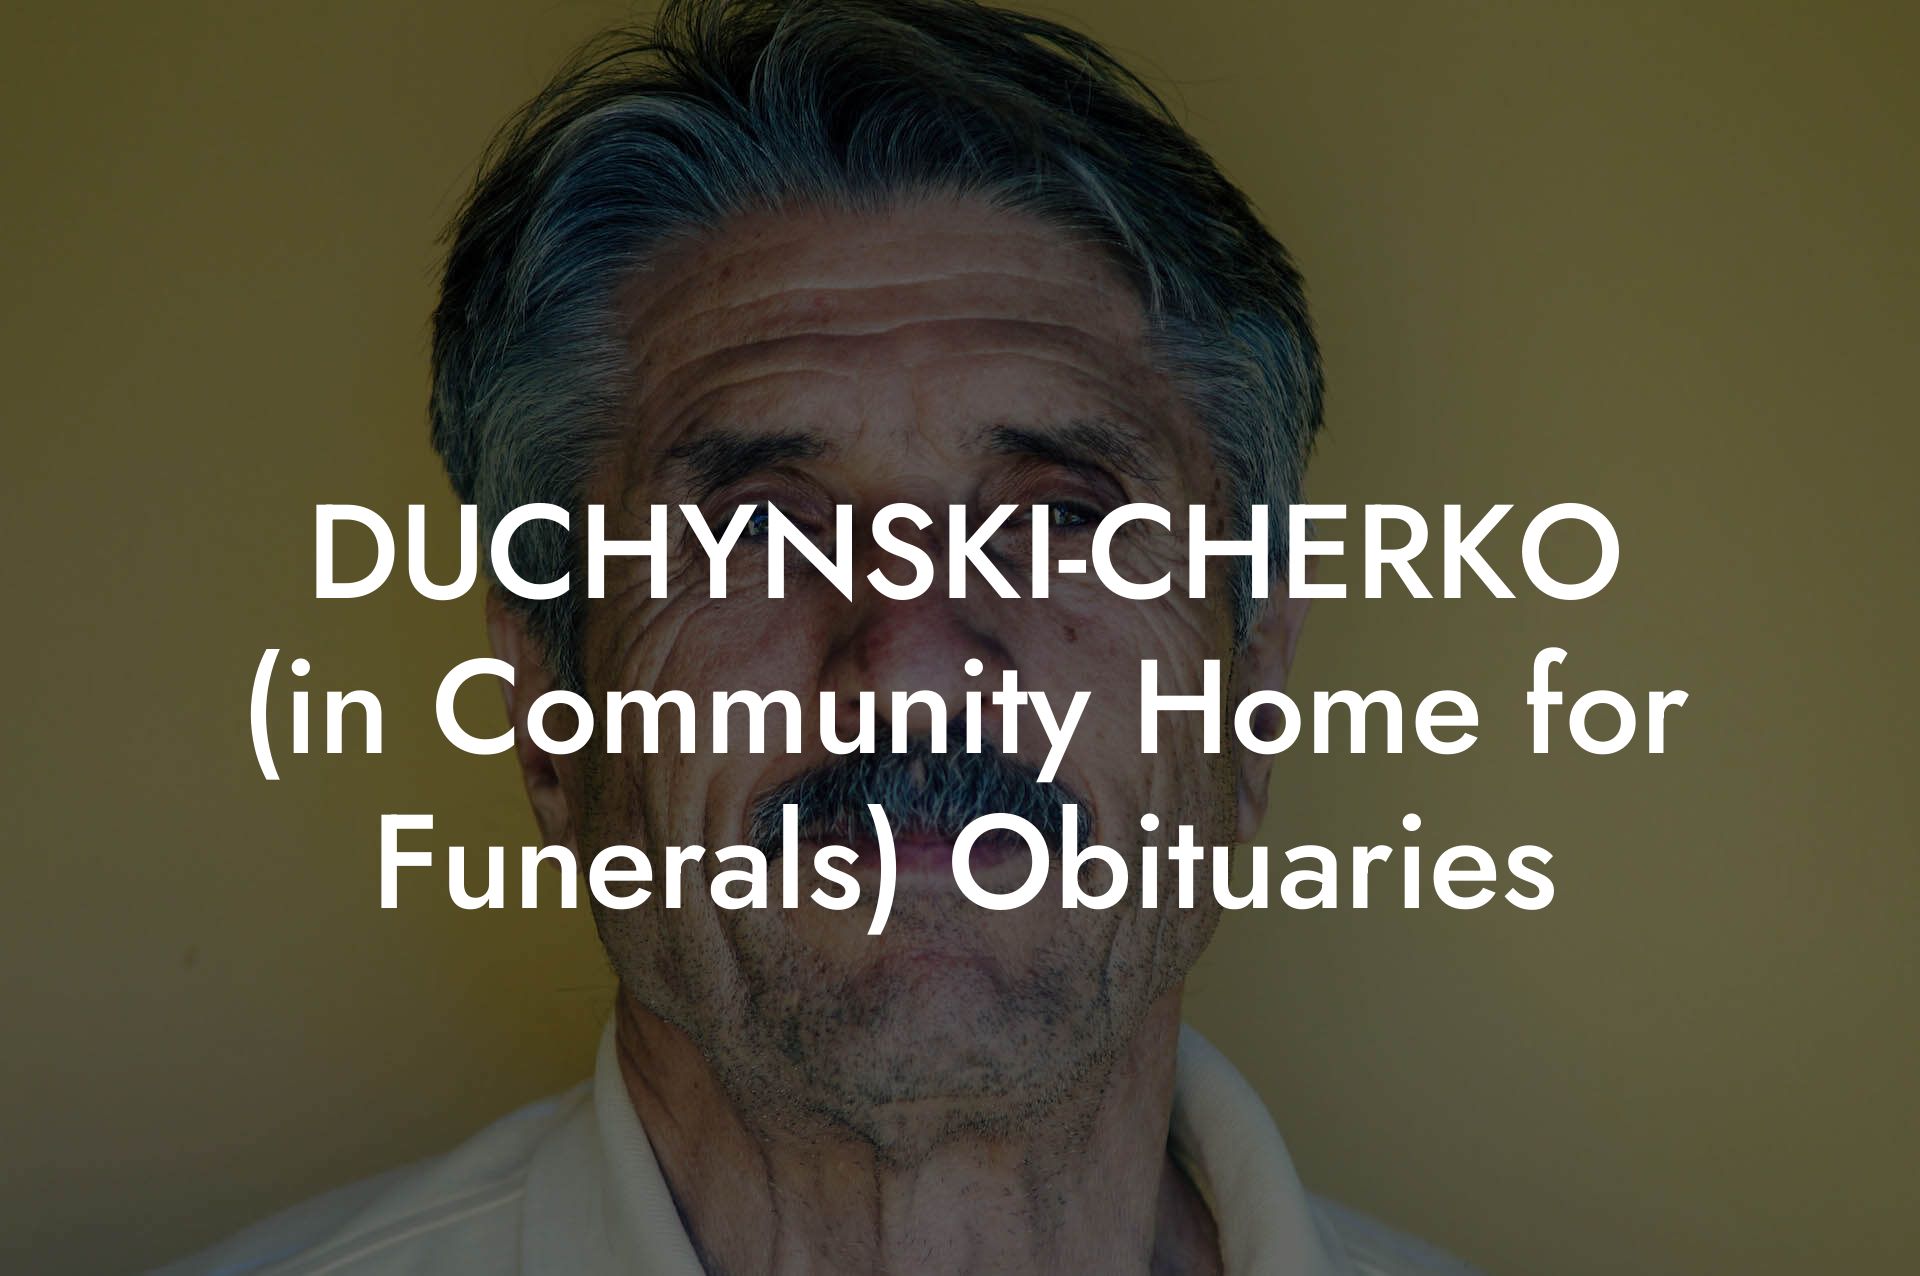 DUCHYNSKI-CHERKO (in Community Home for Funerals) Obituaries